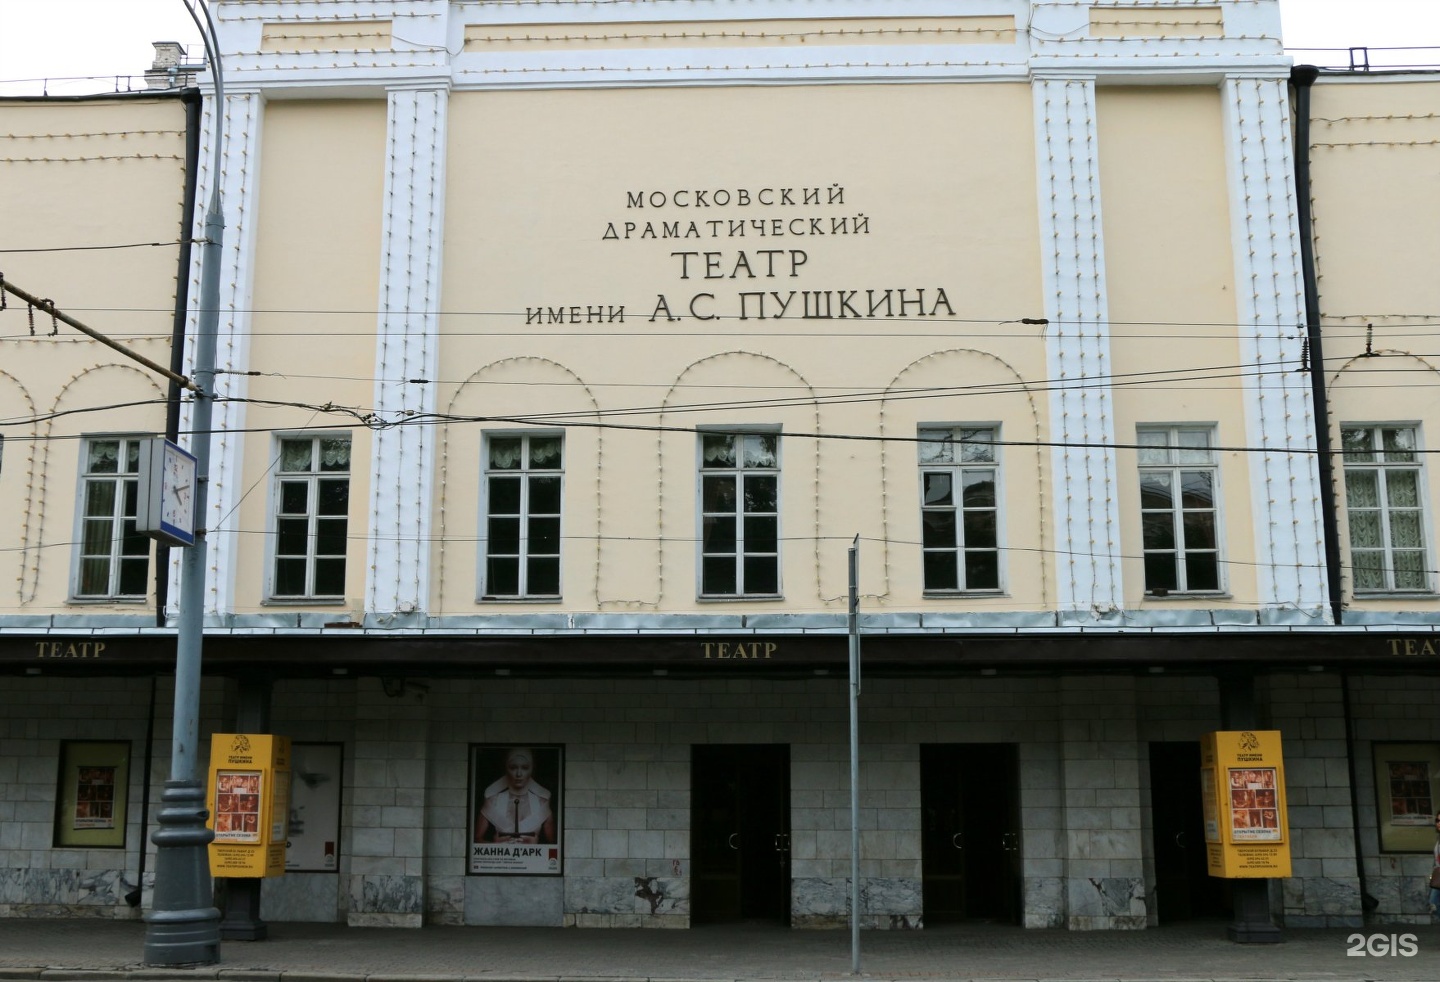 Театр имени Пушкина Тверской бульвар 23